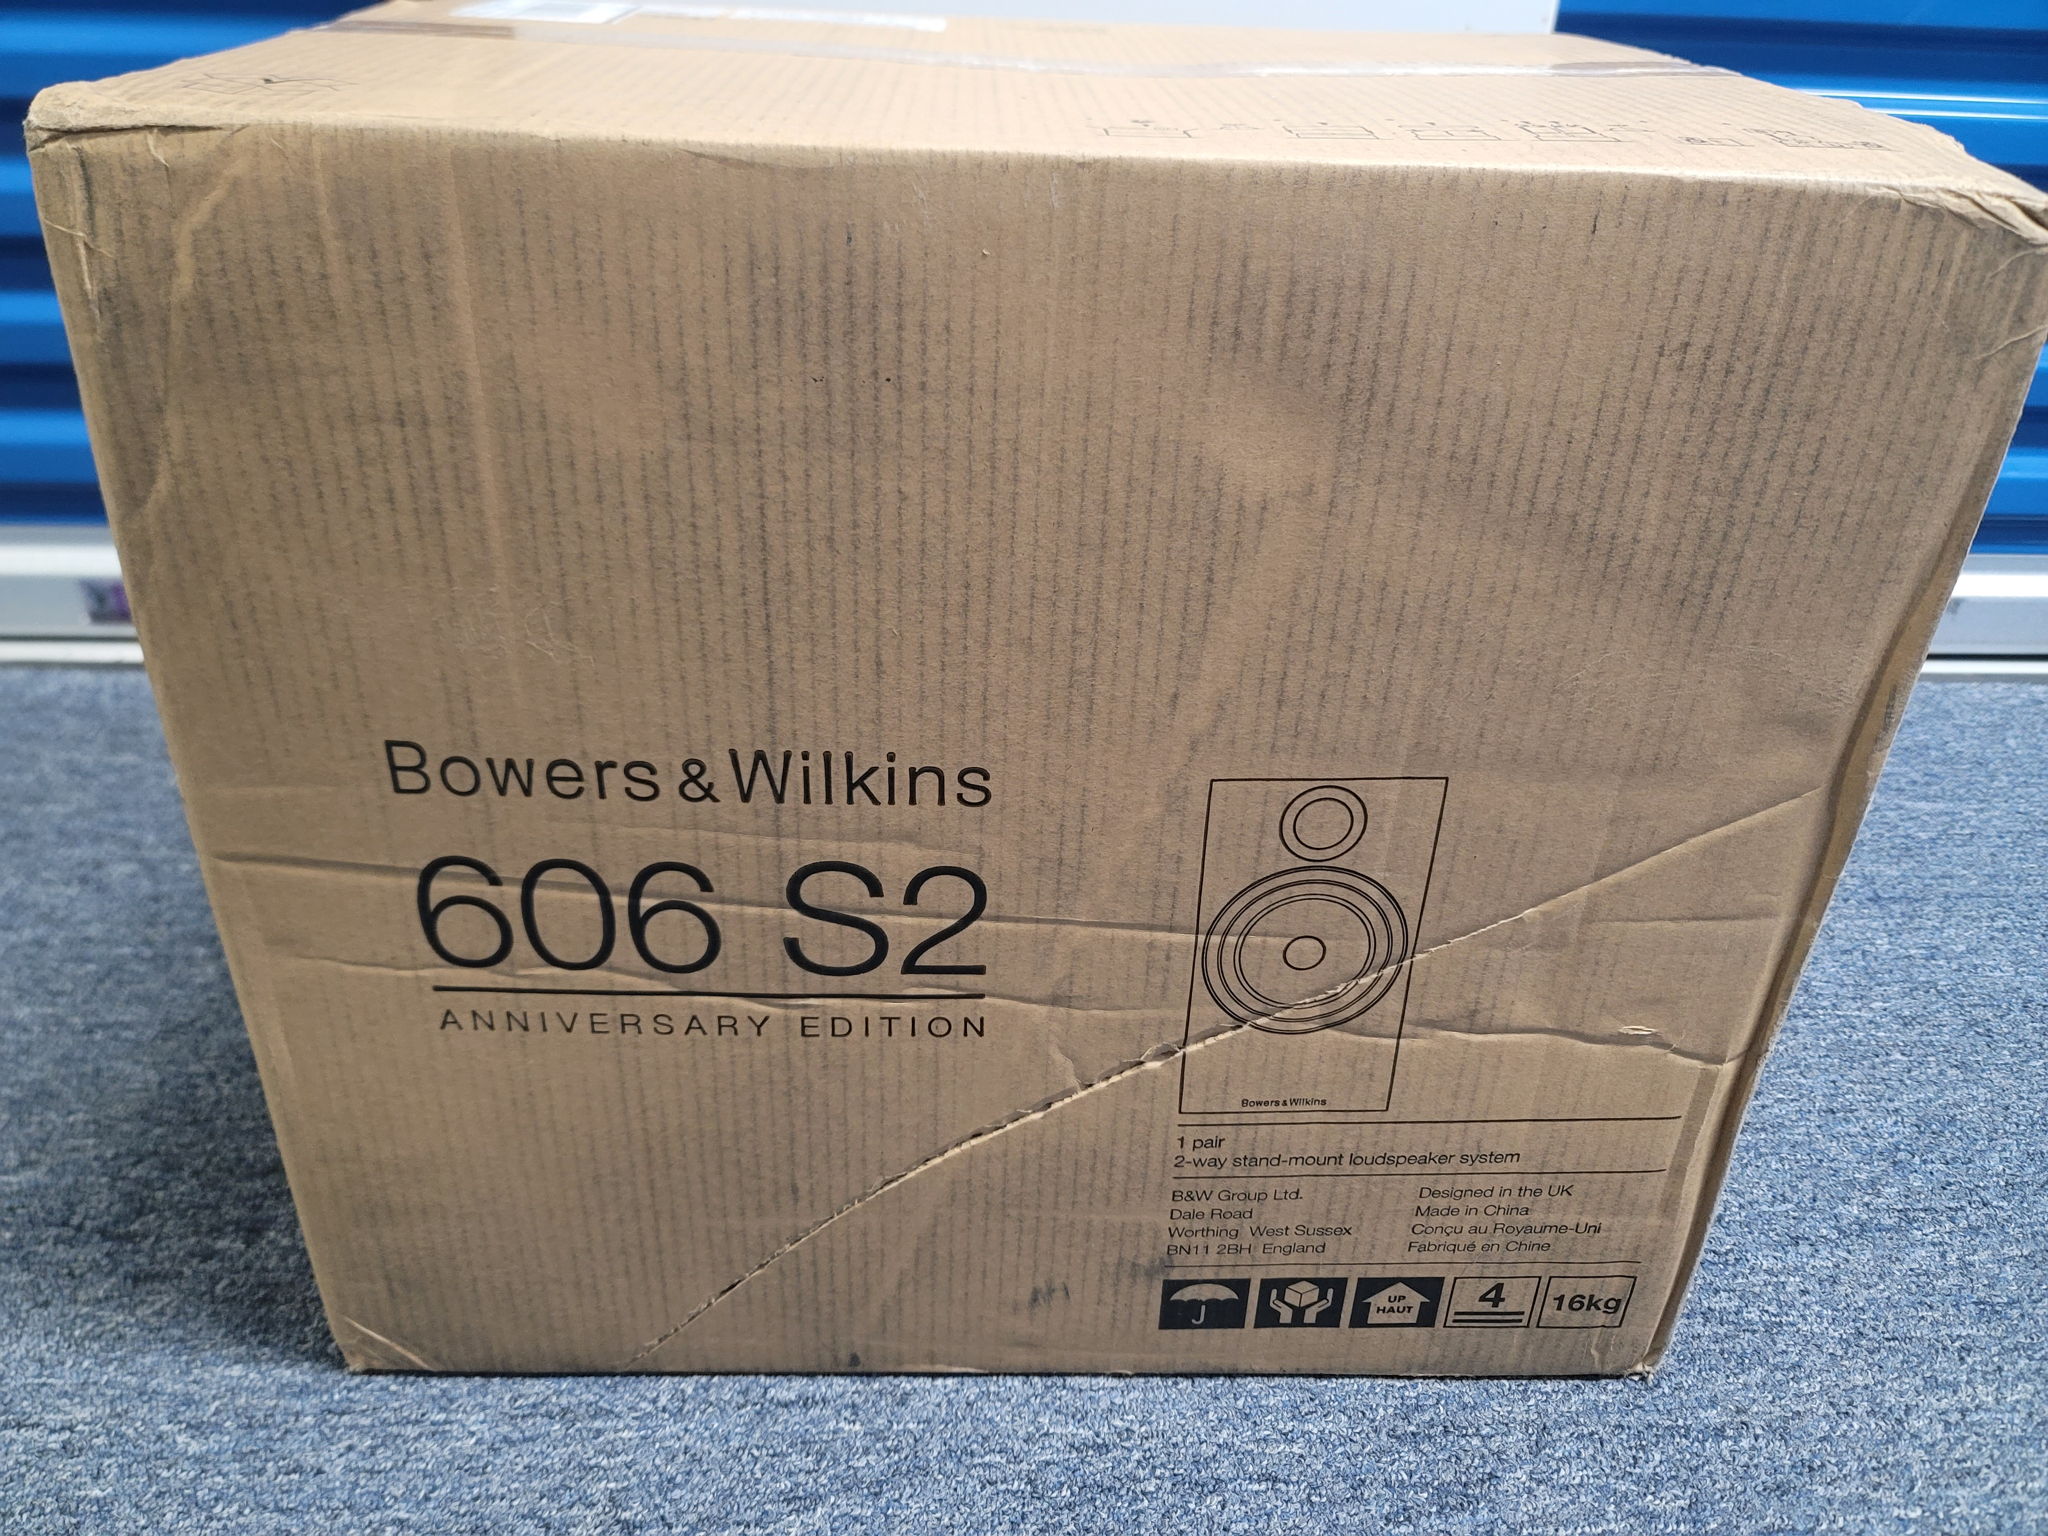 B&W (Bowers & Wilkins) 606s2 Anniversary Edition 2